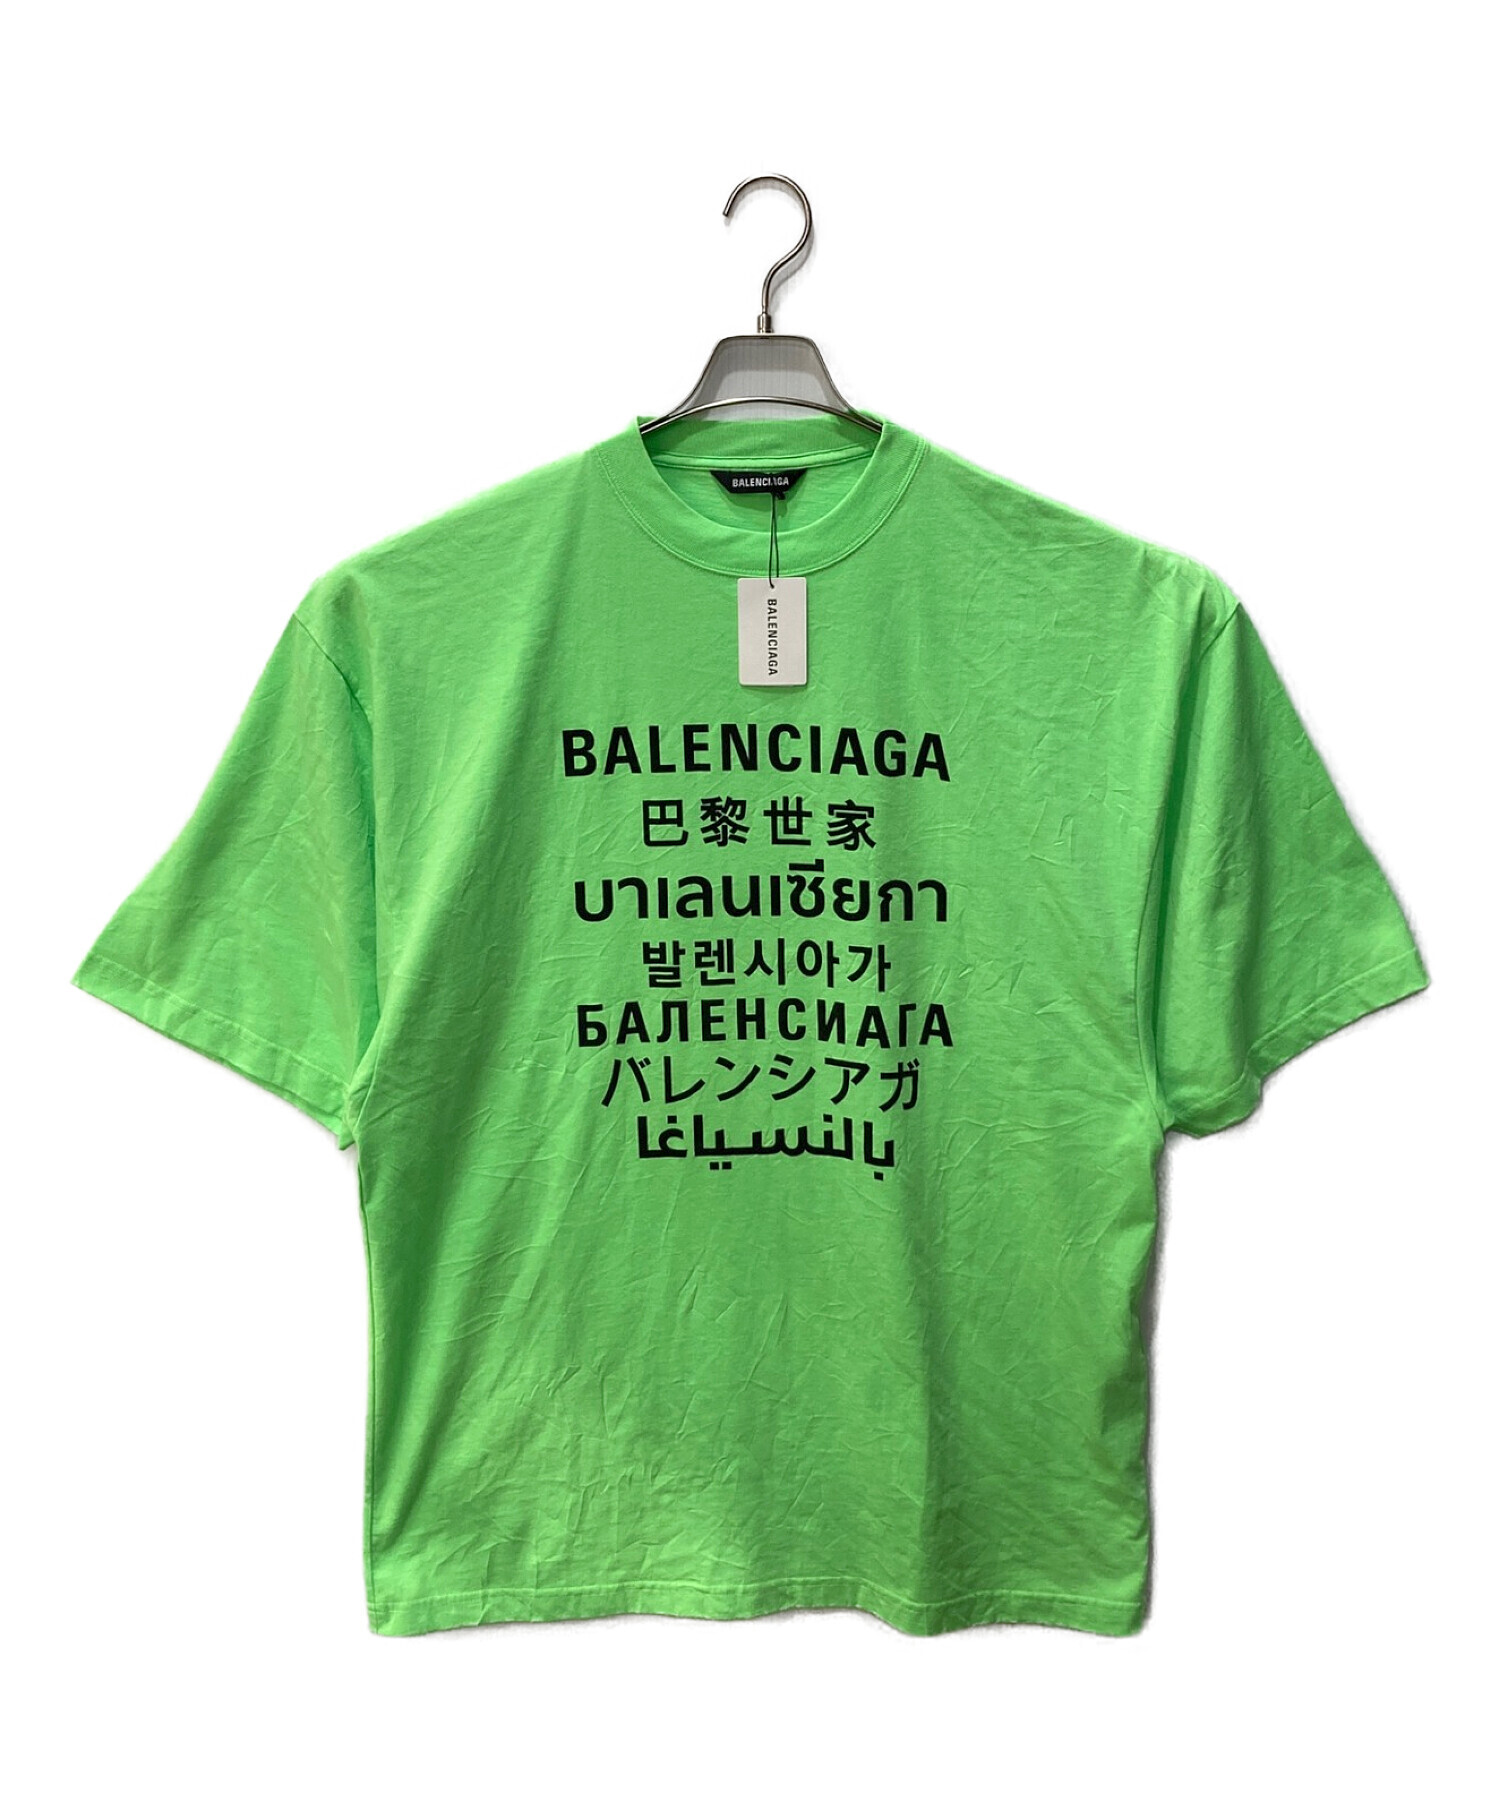 BALENCIAGA (バレンシアガ) ランゲージTシャツ 黄緑 サイズ:S 未使用品